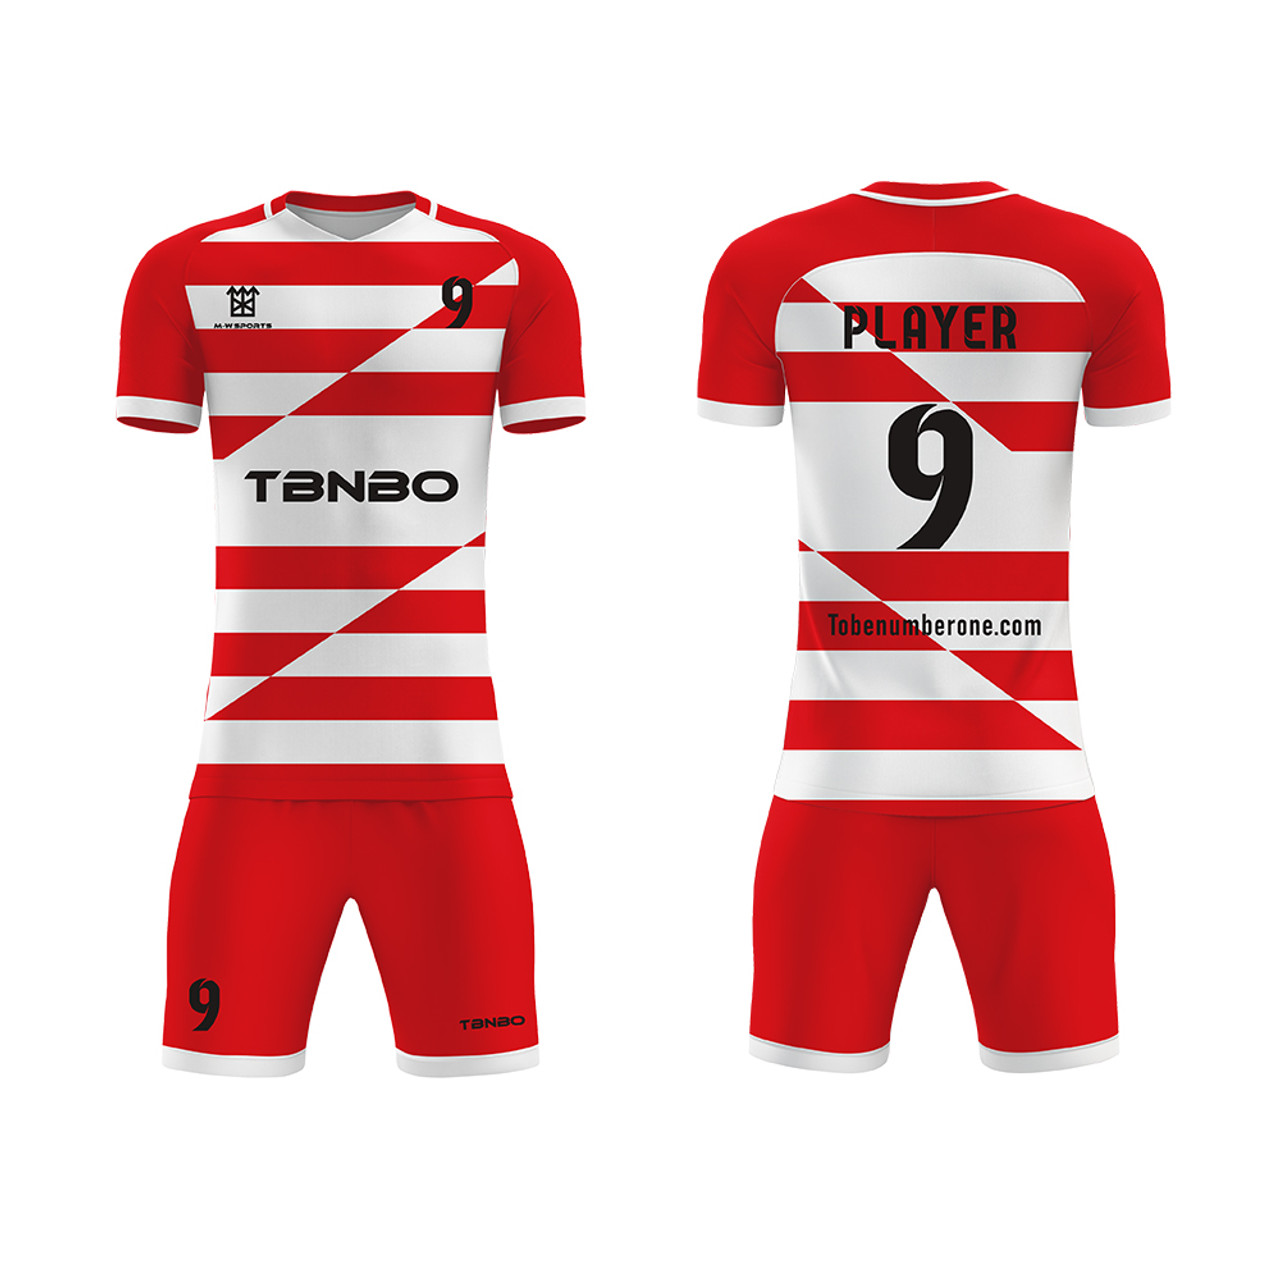 Football Training Shirts Design Sublimation Digital Printing Men's Stripe  Soccer Team Jersey Wear